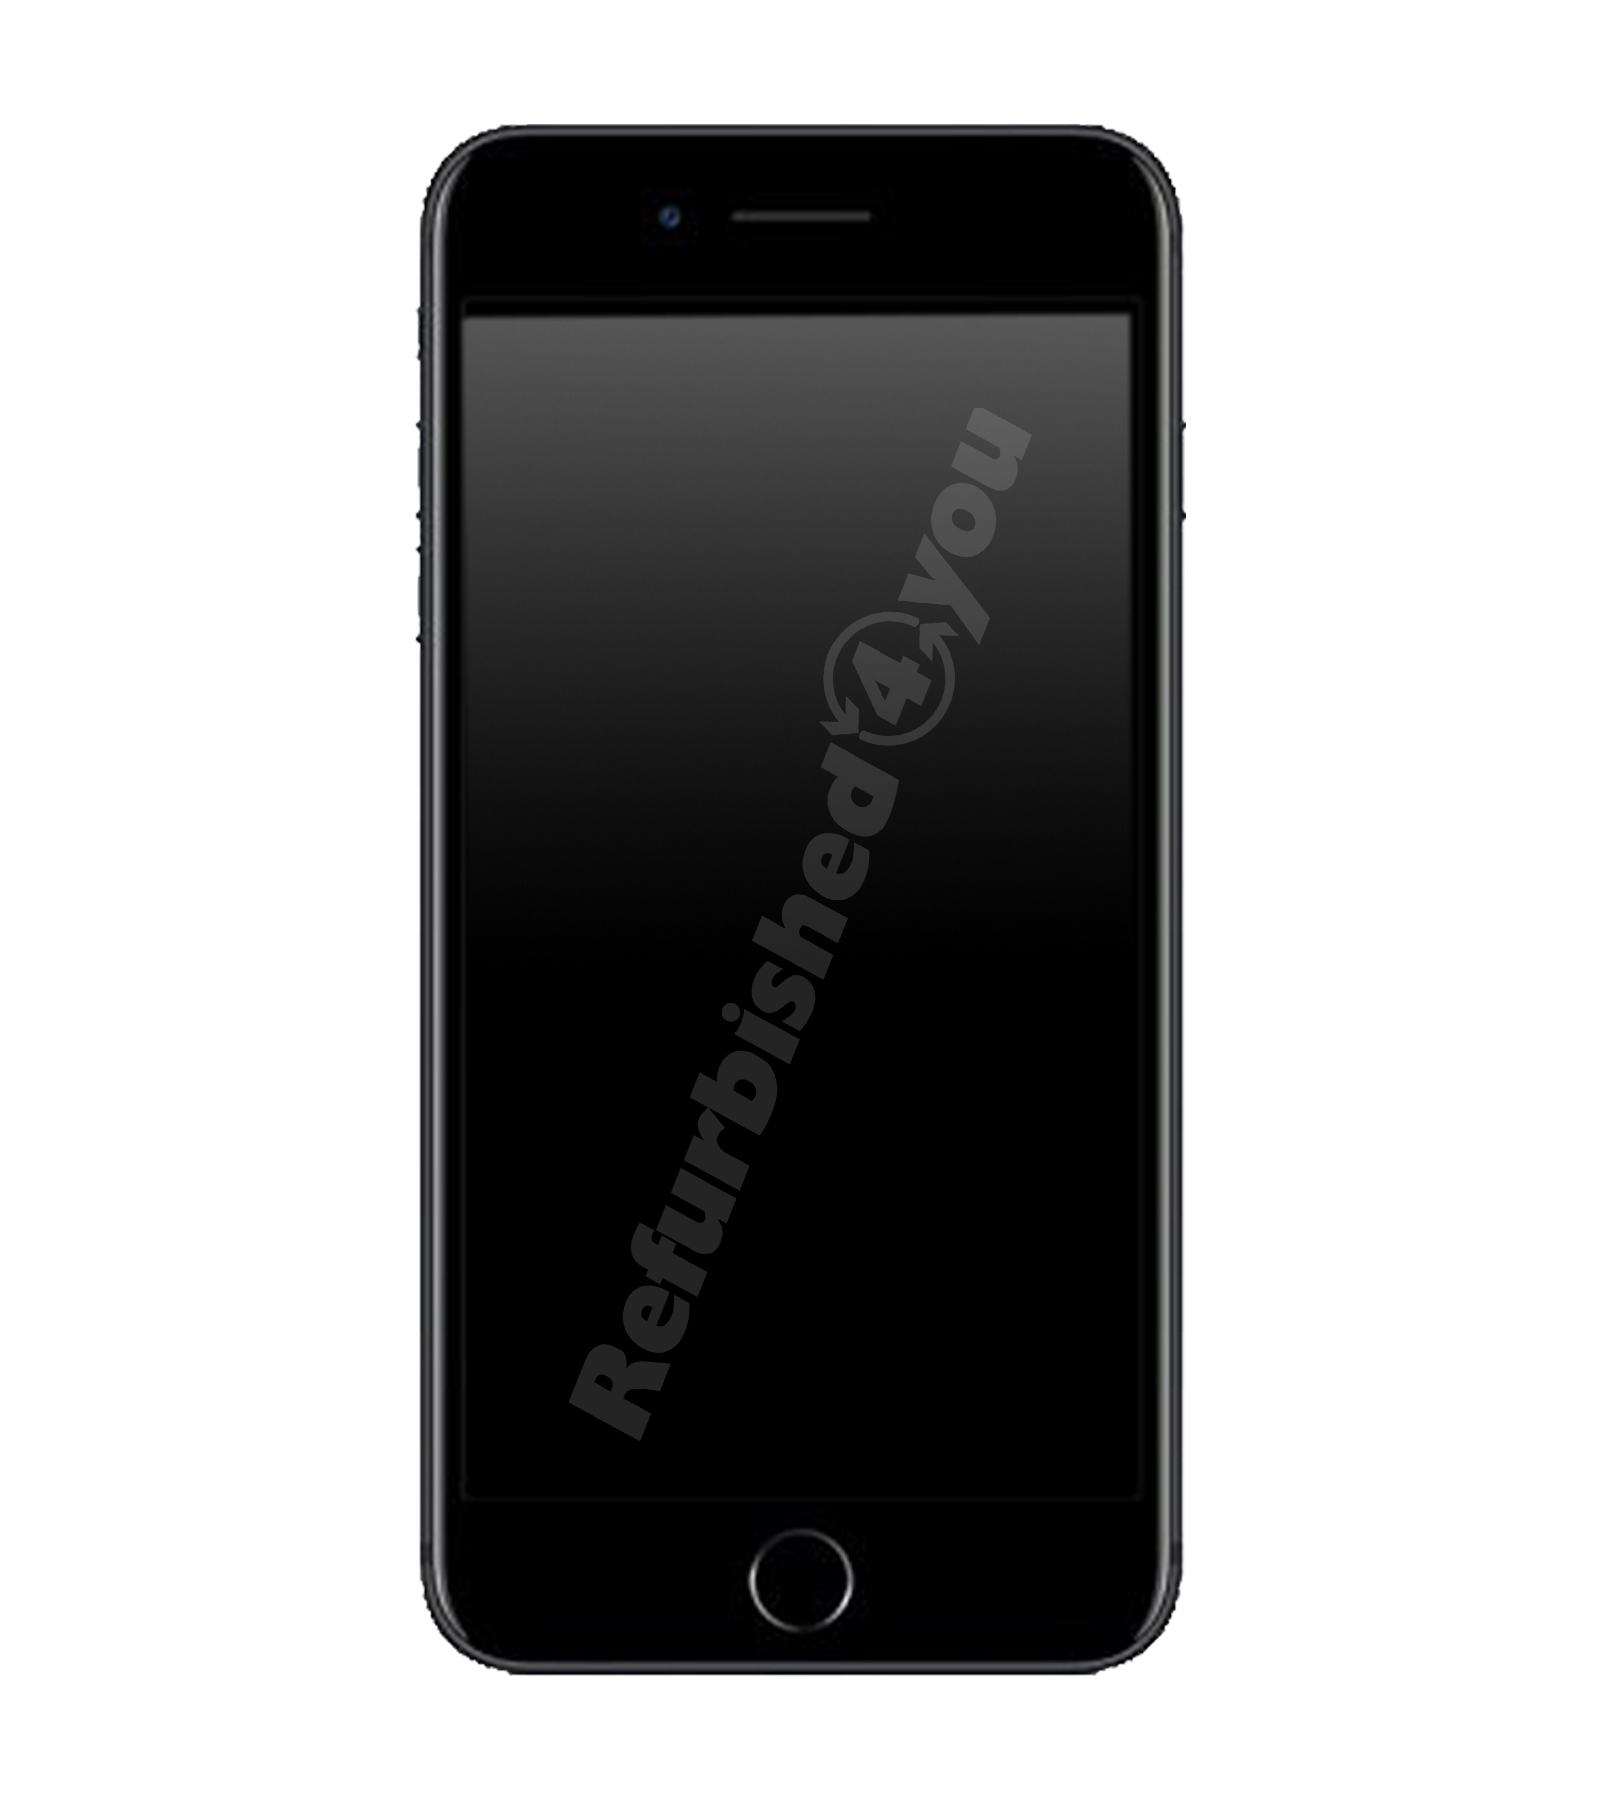 Apple iPhone 7 128GB A1778 Silver (MN922ZD/A) space grey - ohne SimLock iOS 